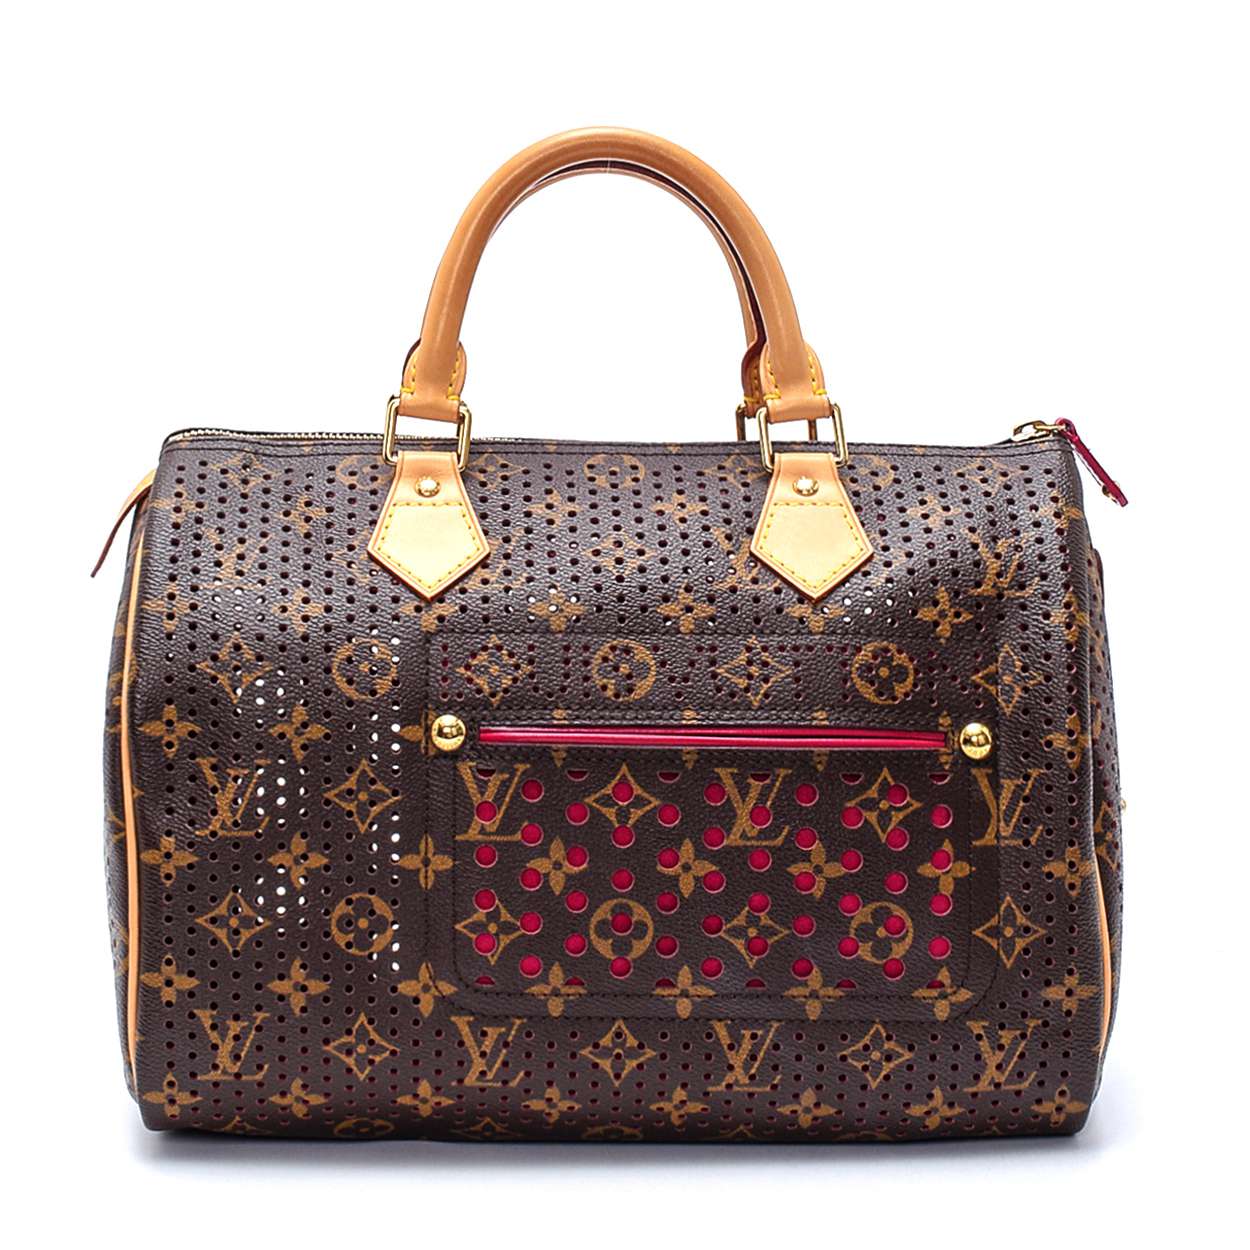 Louis Vuitton - Monogram Fuchsia Perforated Limited Edition Speedy 30 Bag 